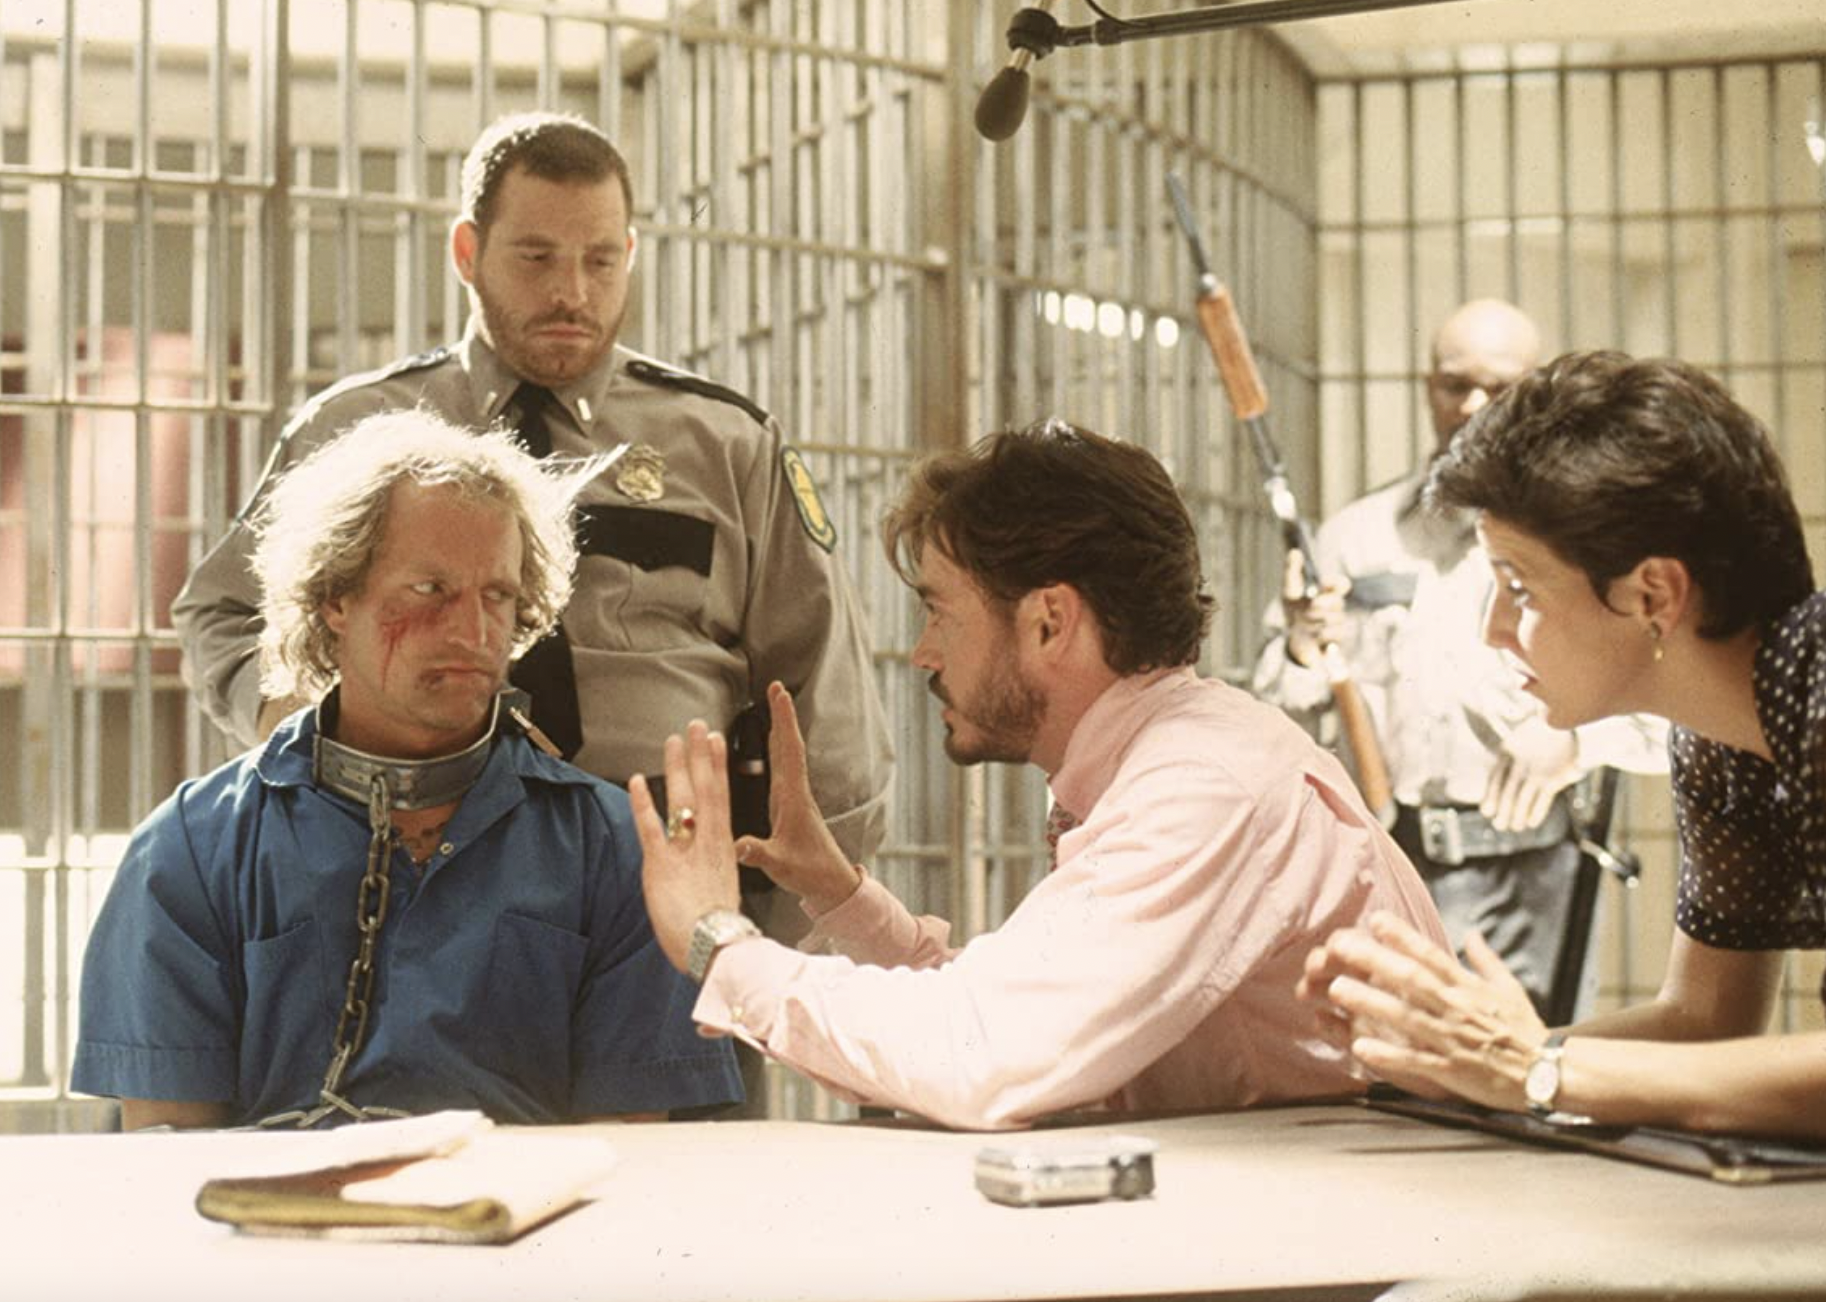 Robert Downey Jr., Woody Harrelson, Louis Lombardi, and Terrylene in "Natural Born Killers".